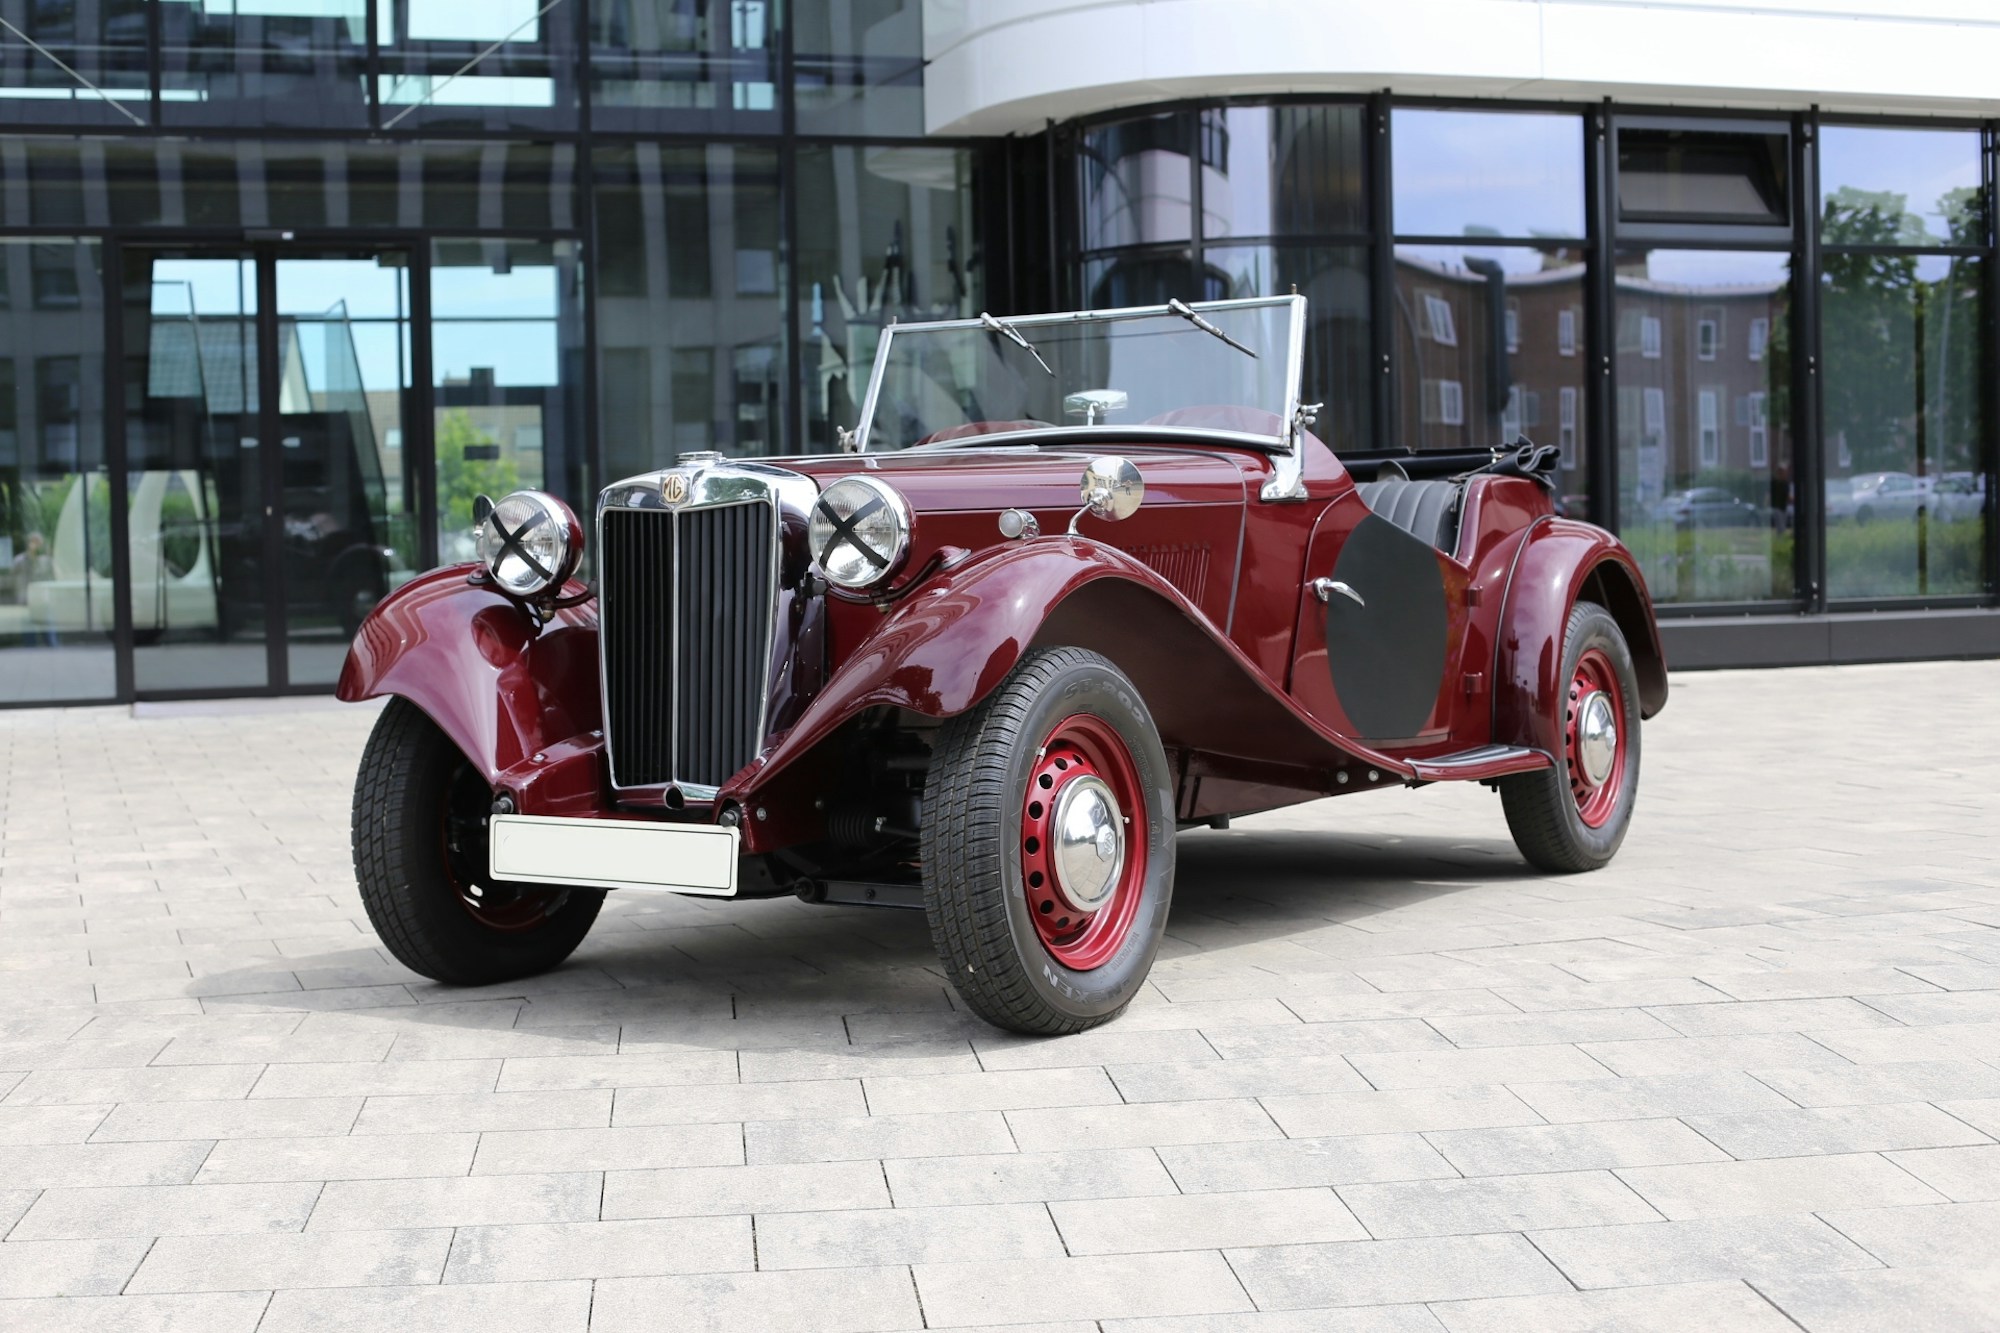 1952 MG TD for sale by auction in Bielefeld, Ostwestfalen-Lippe, Germany